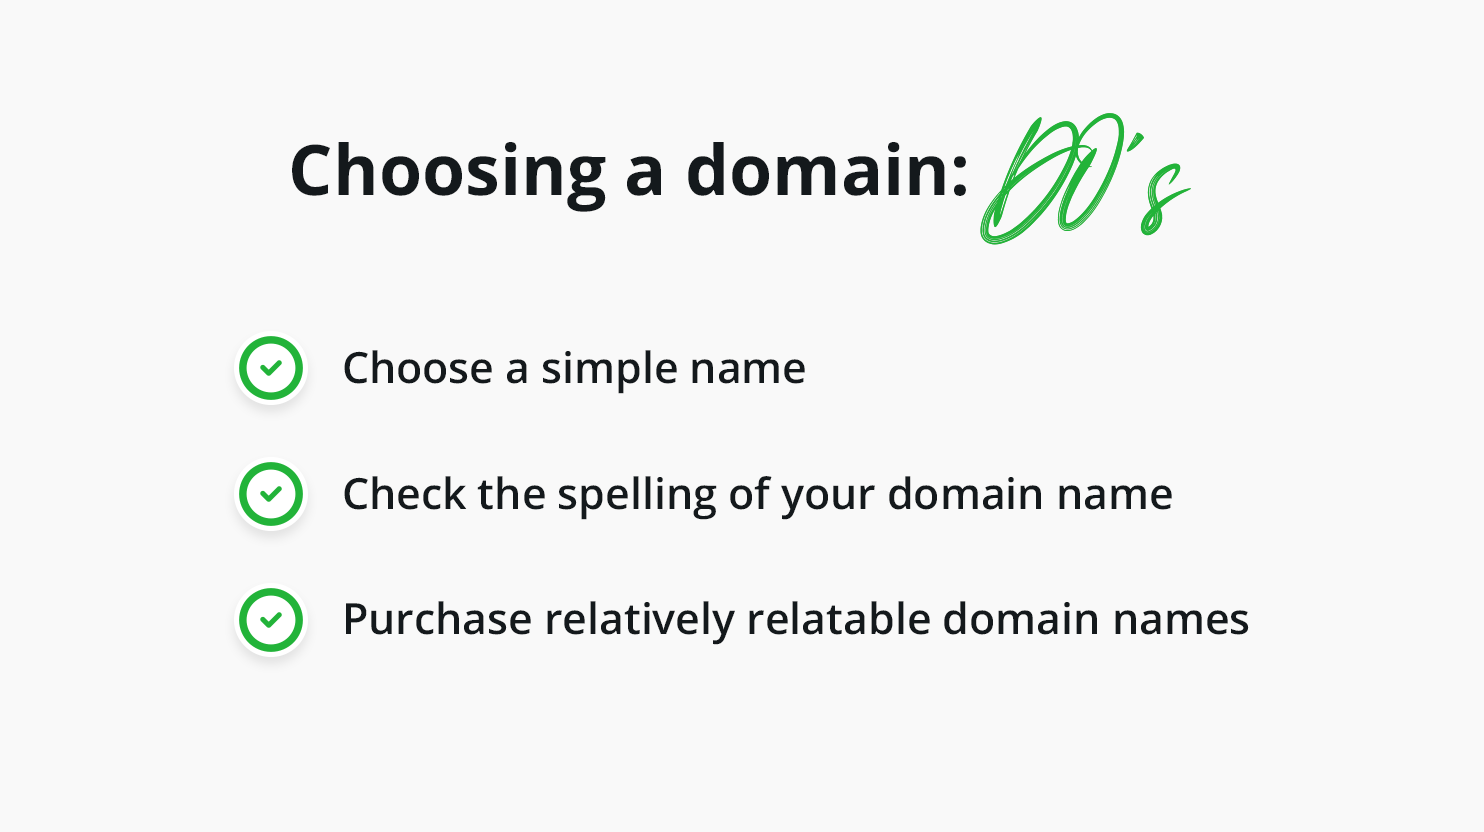 Dos of choosing a domain name